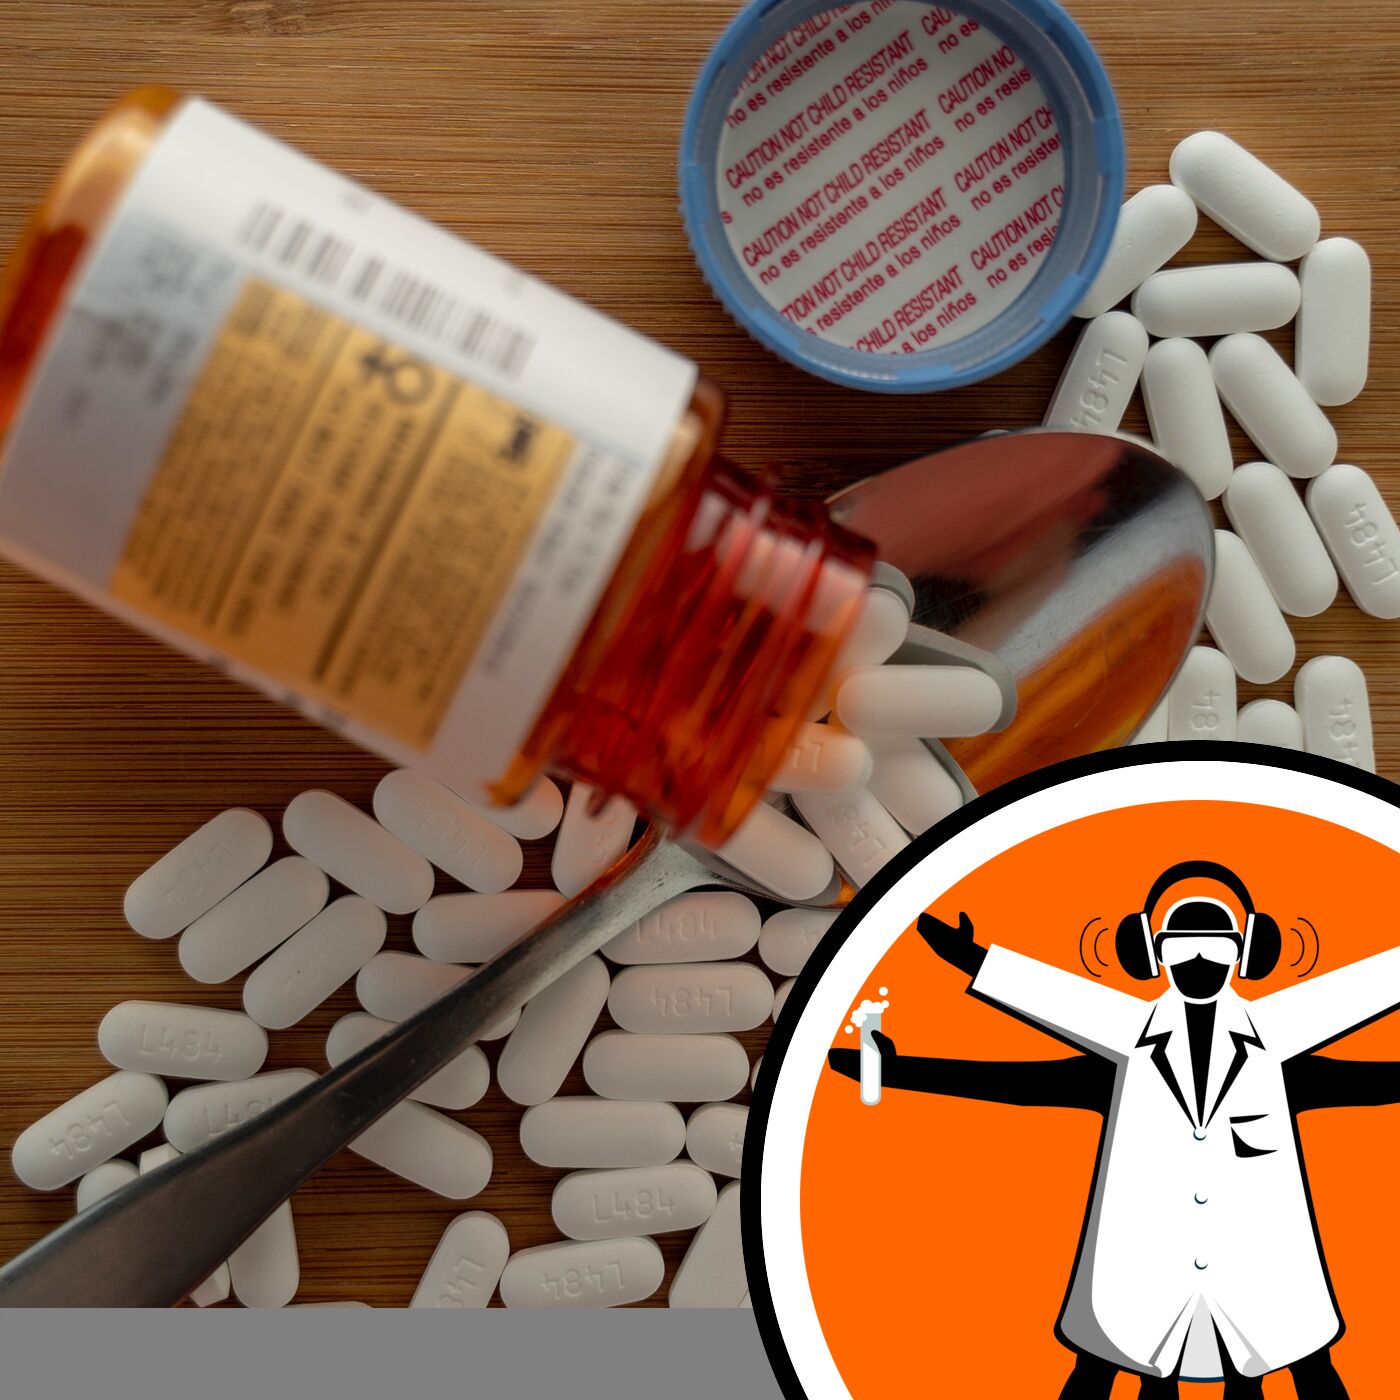 New treatment for paracetamol overdose